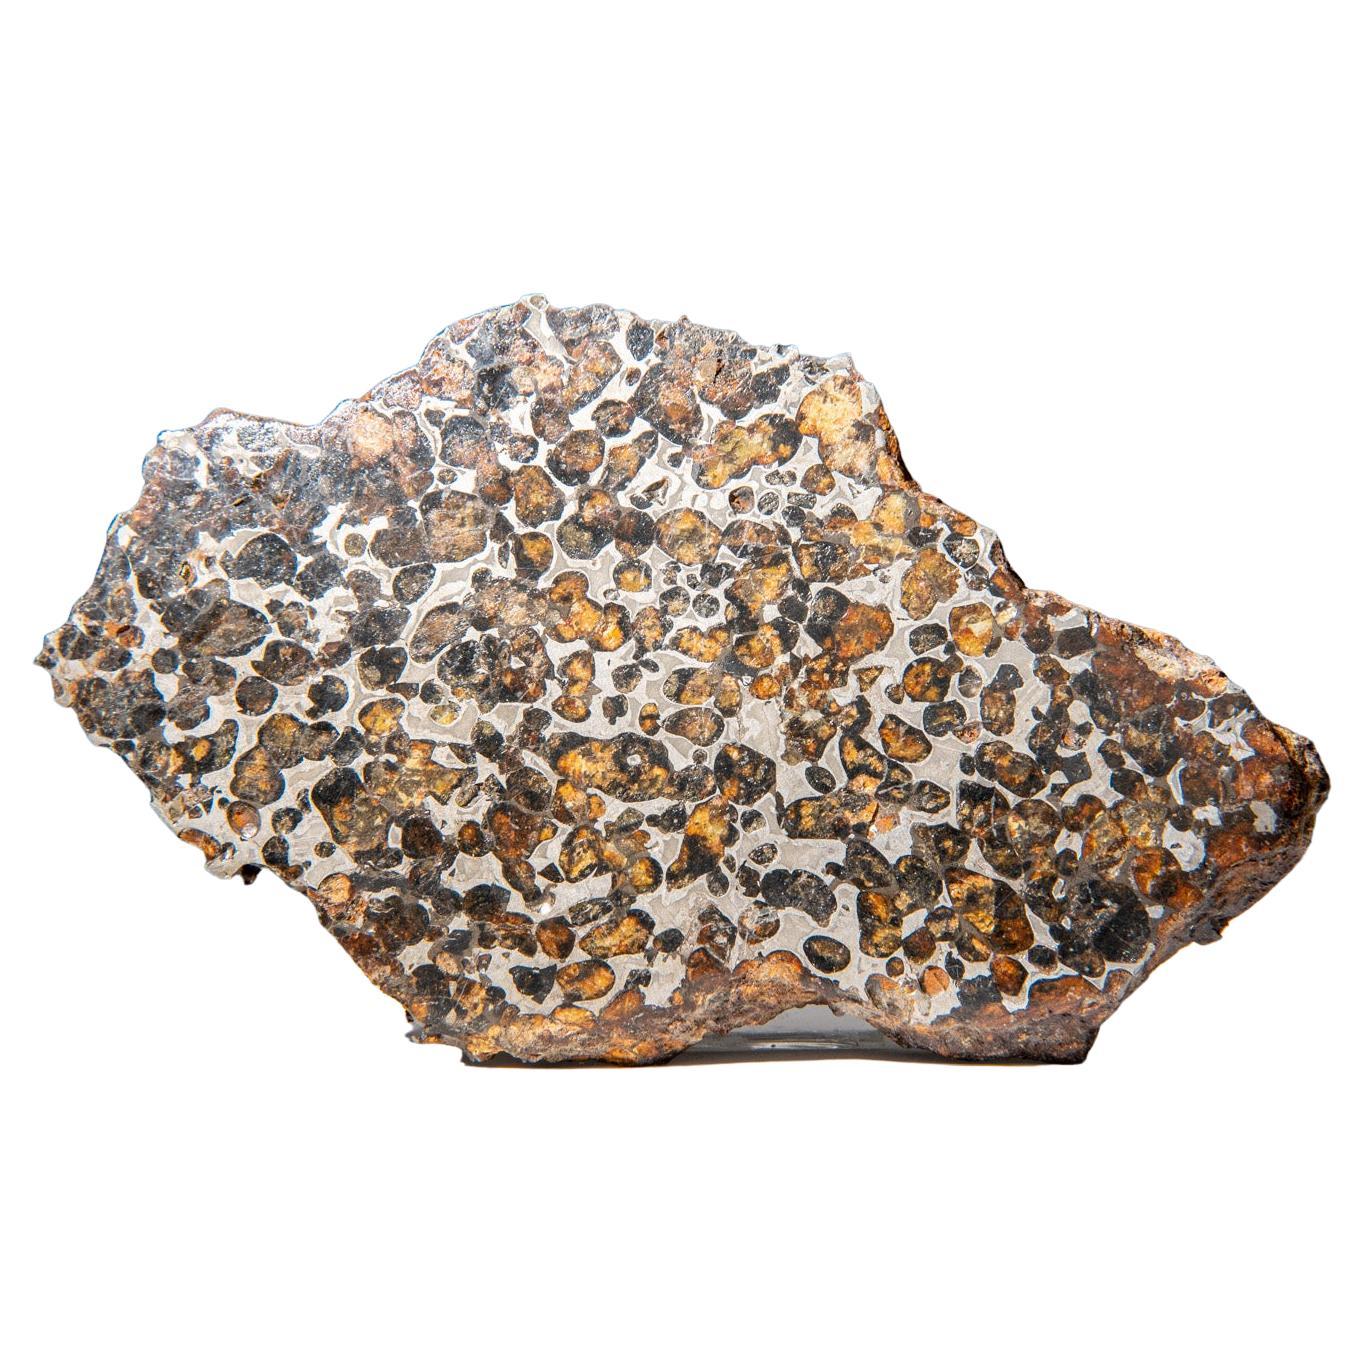 Genuine Sericho Pallasite Meteorite Slab (2.45 lbs) For Sale